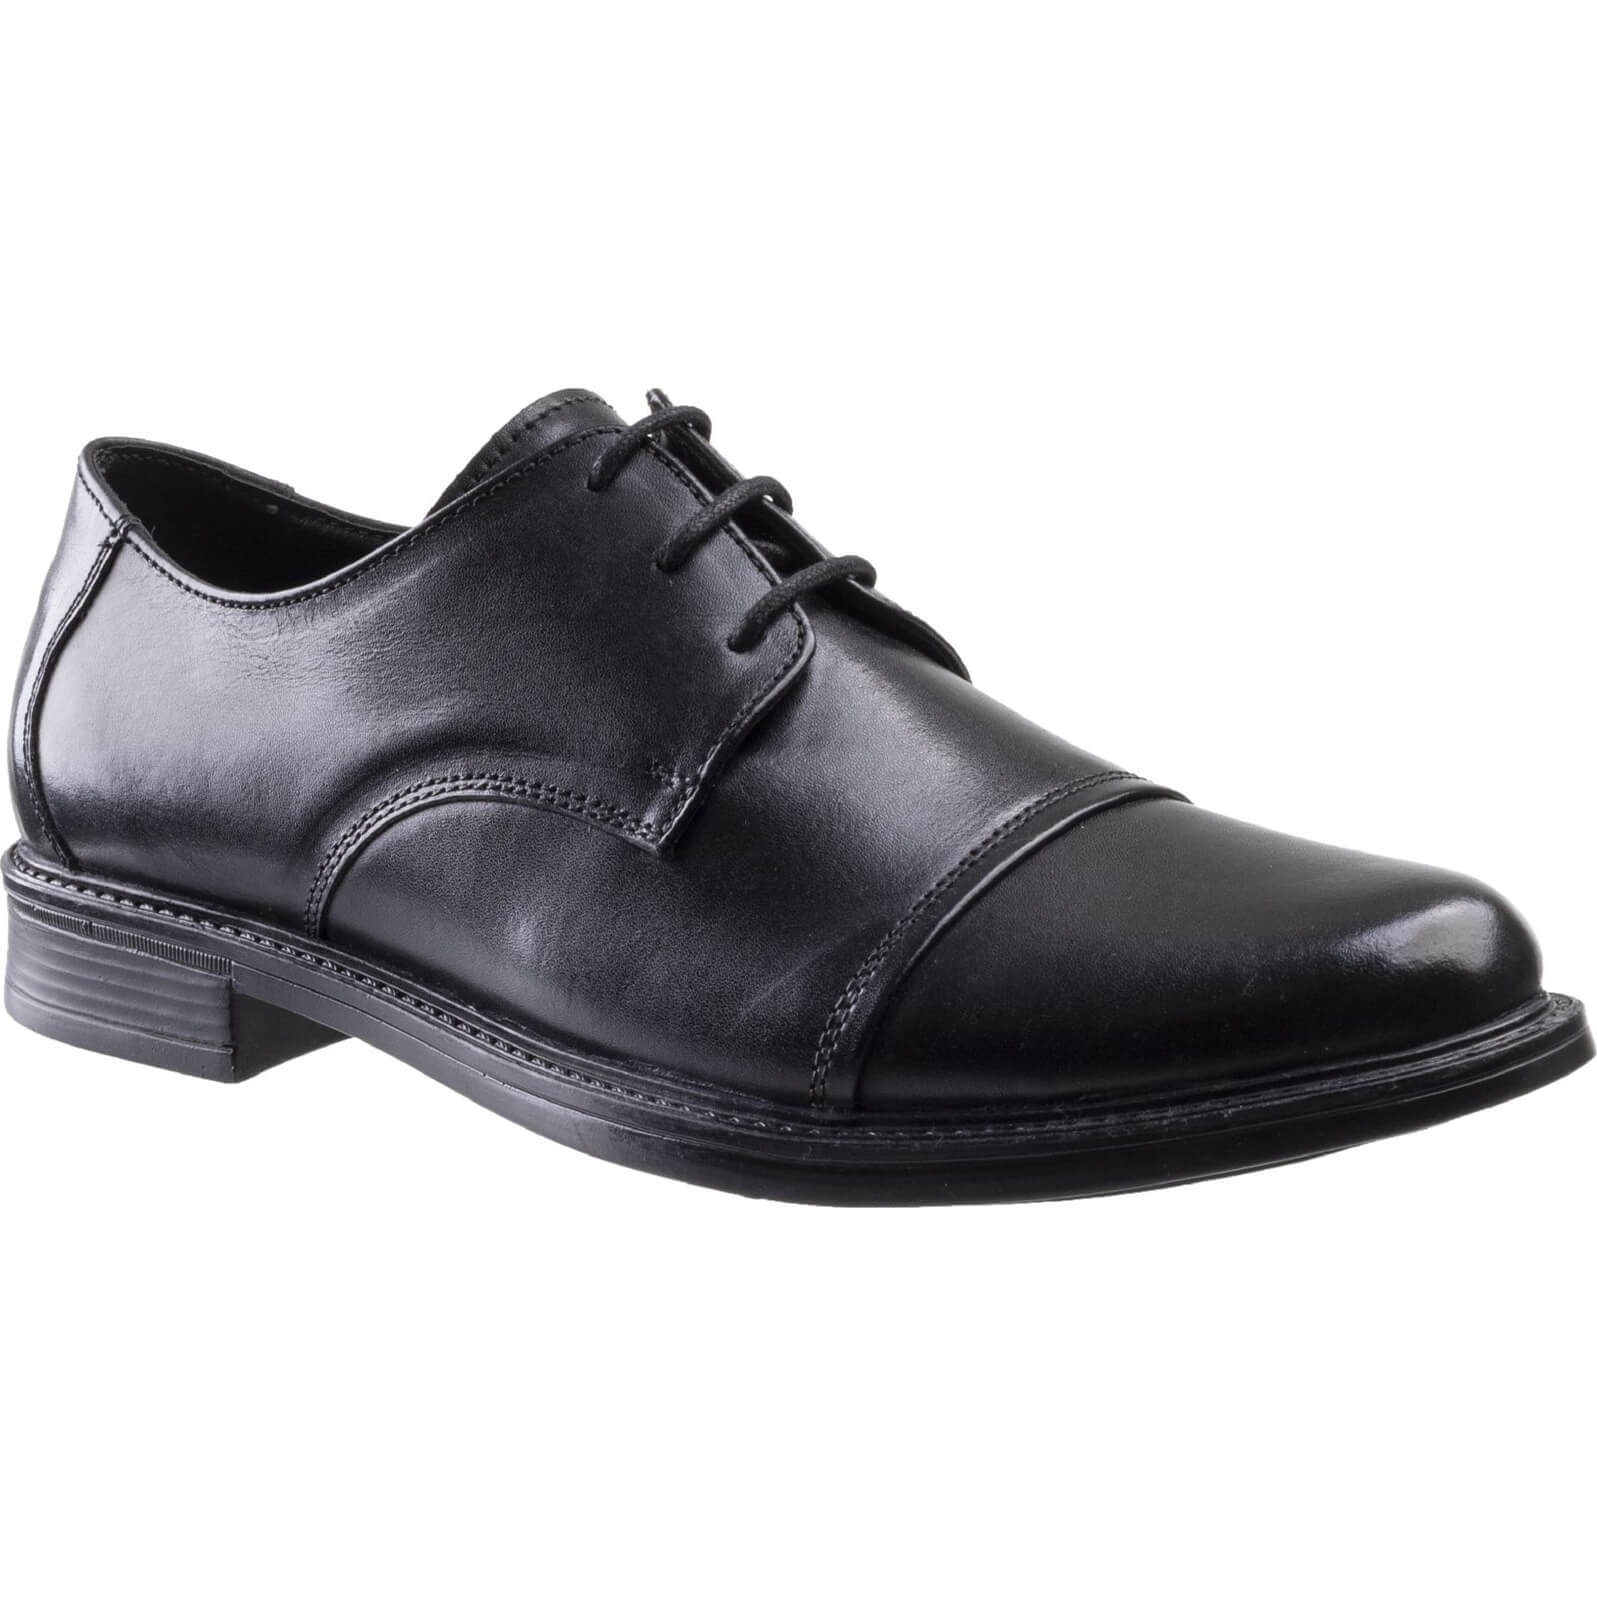 Image of Amblers Bristol Lace Up Shoe Black Size 10